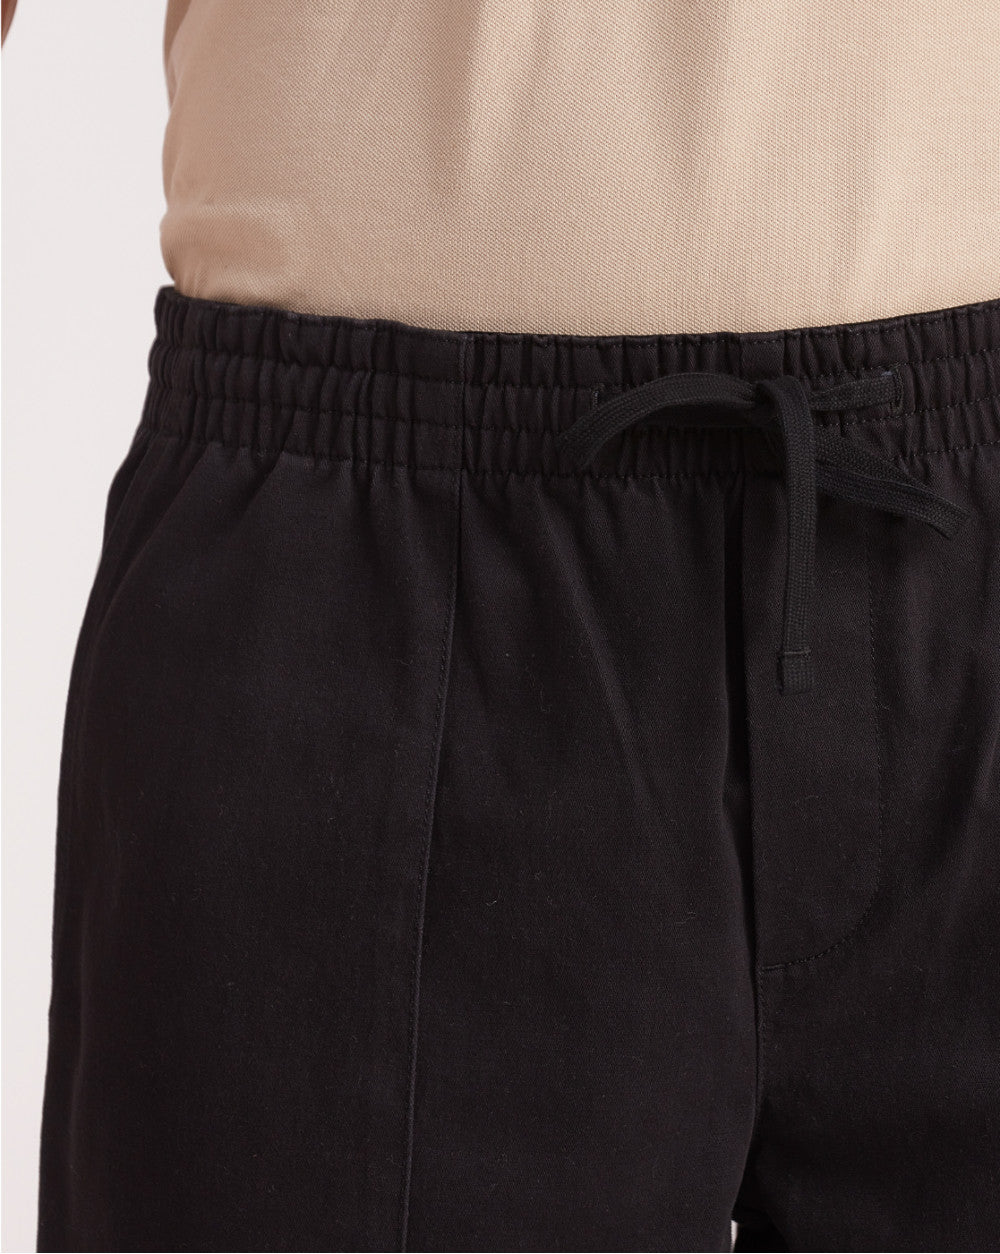 Regular Fit Comfort Elasticized Pull-On Shorts - Jet Black